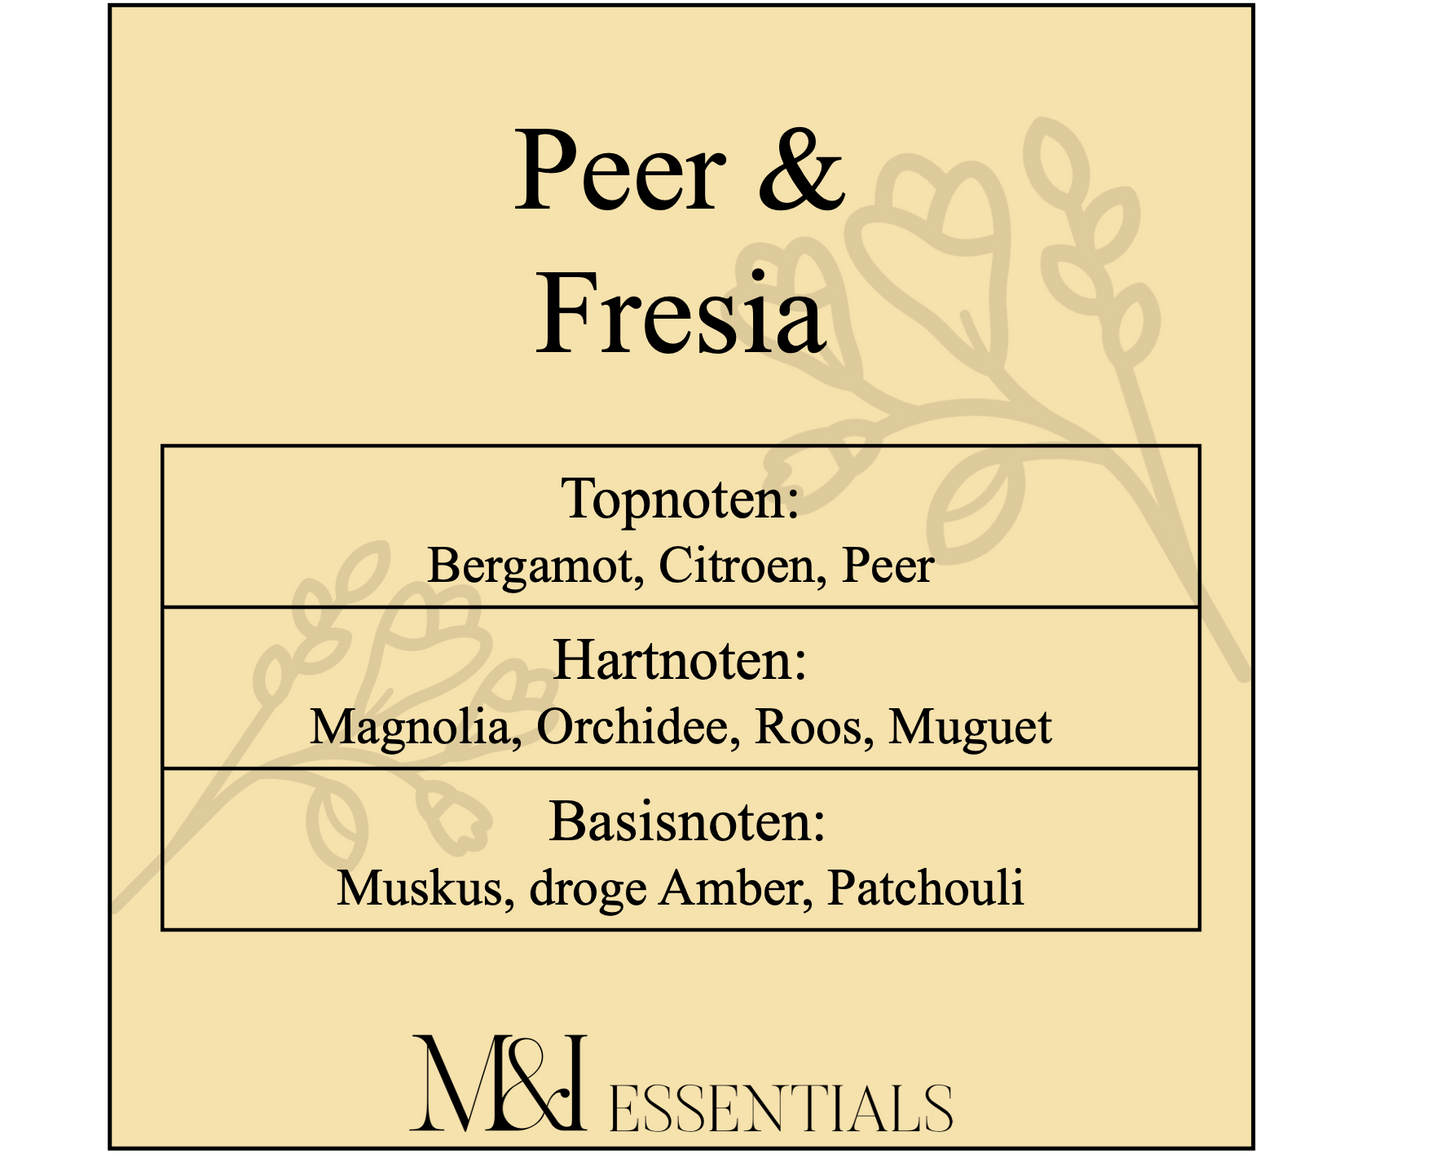 Peer & Fresia - Refill